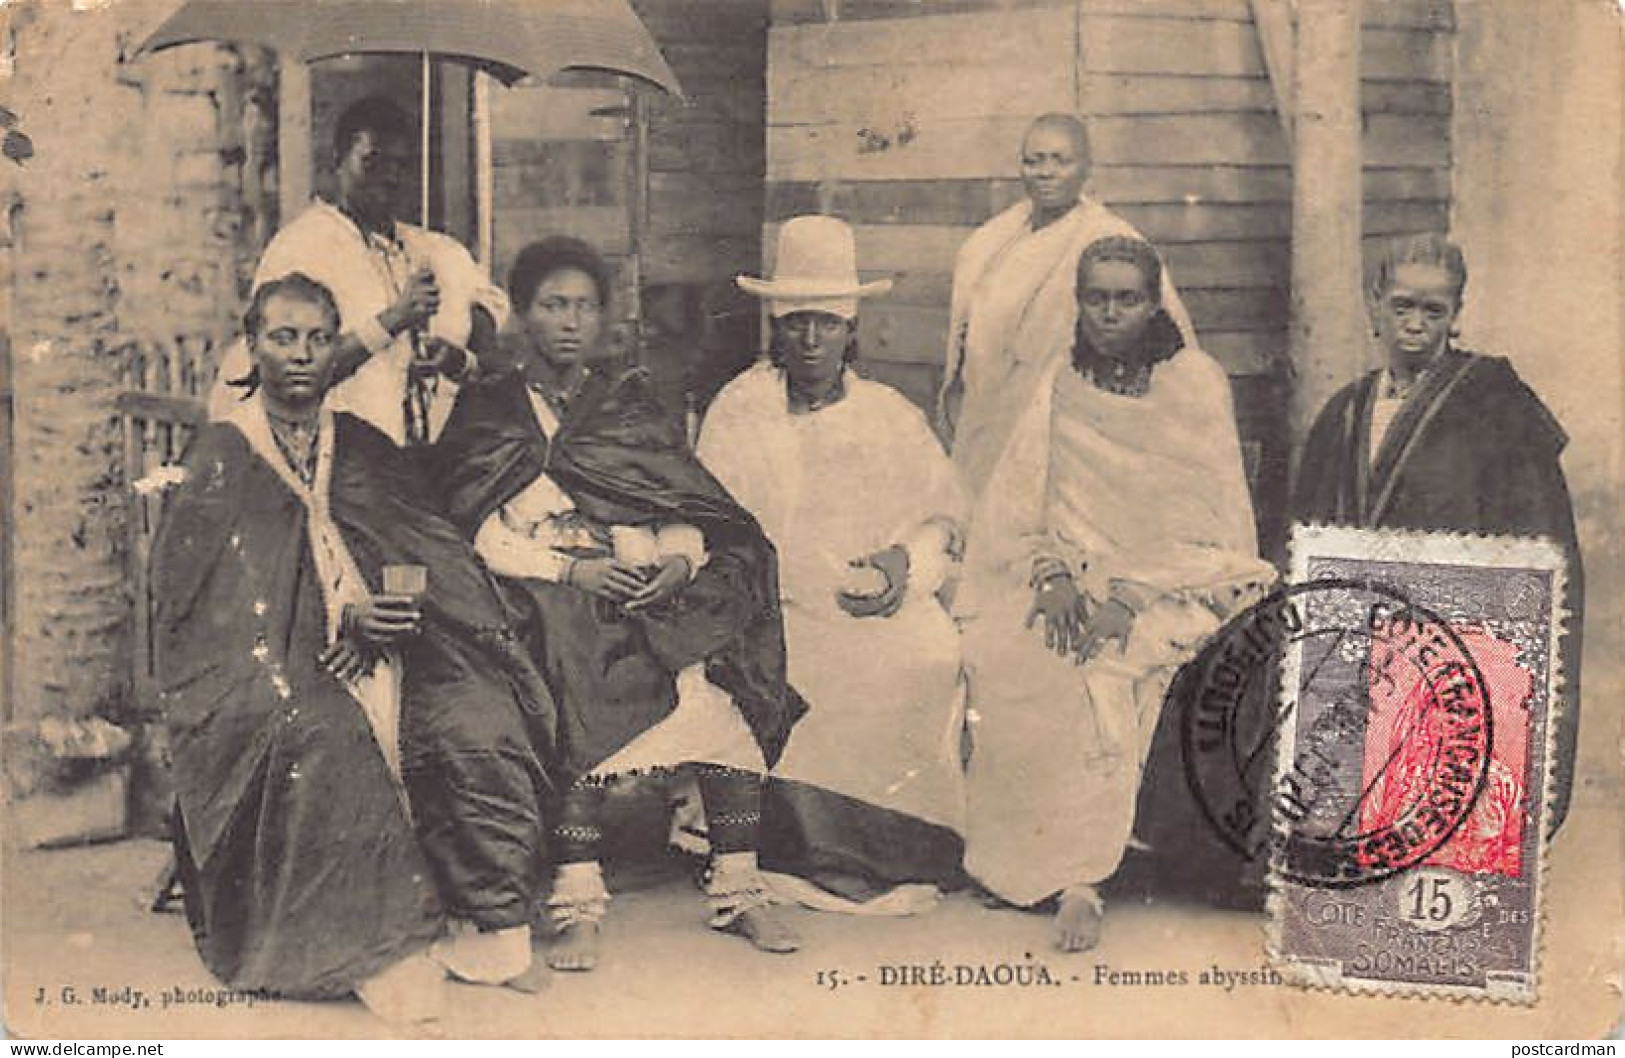 Ethiopia - DIRE DAWA - Abyssinian Women - Publ. J. G. Mody 15 - Ethiopia